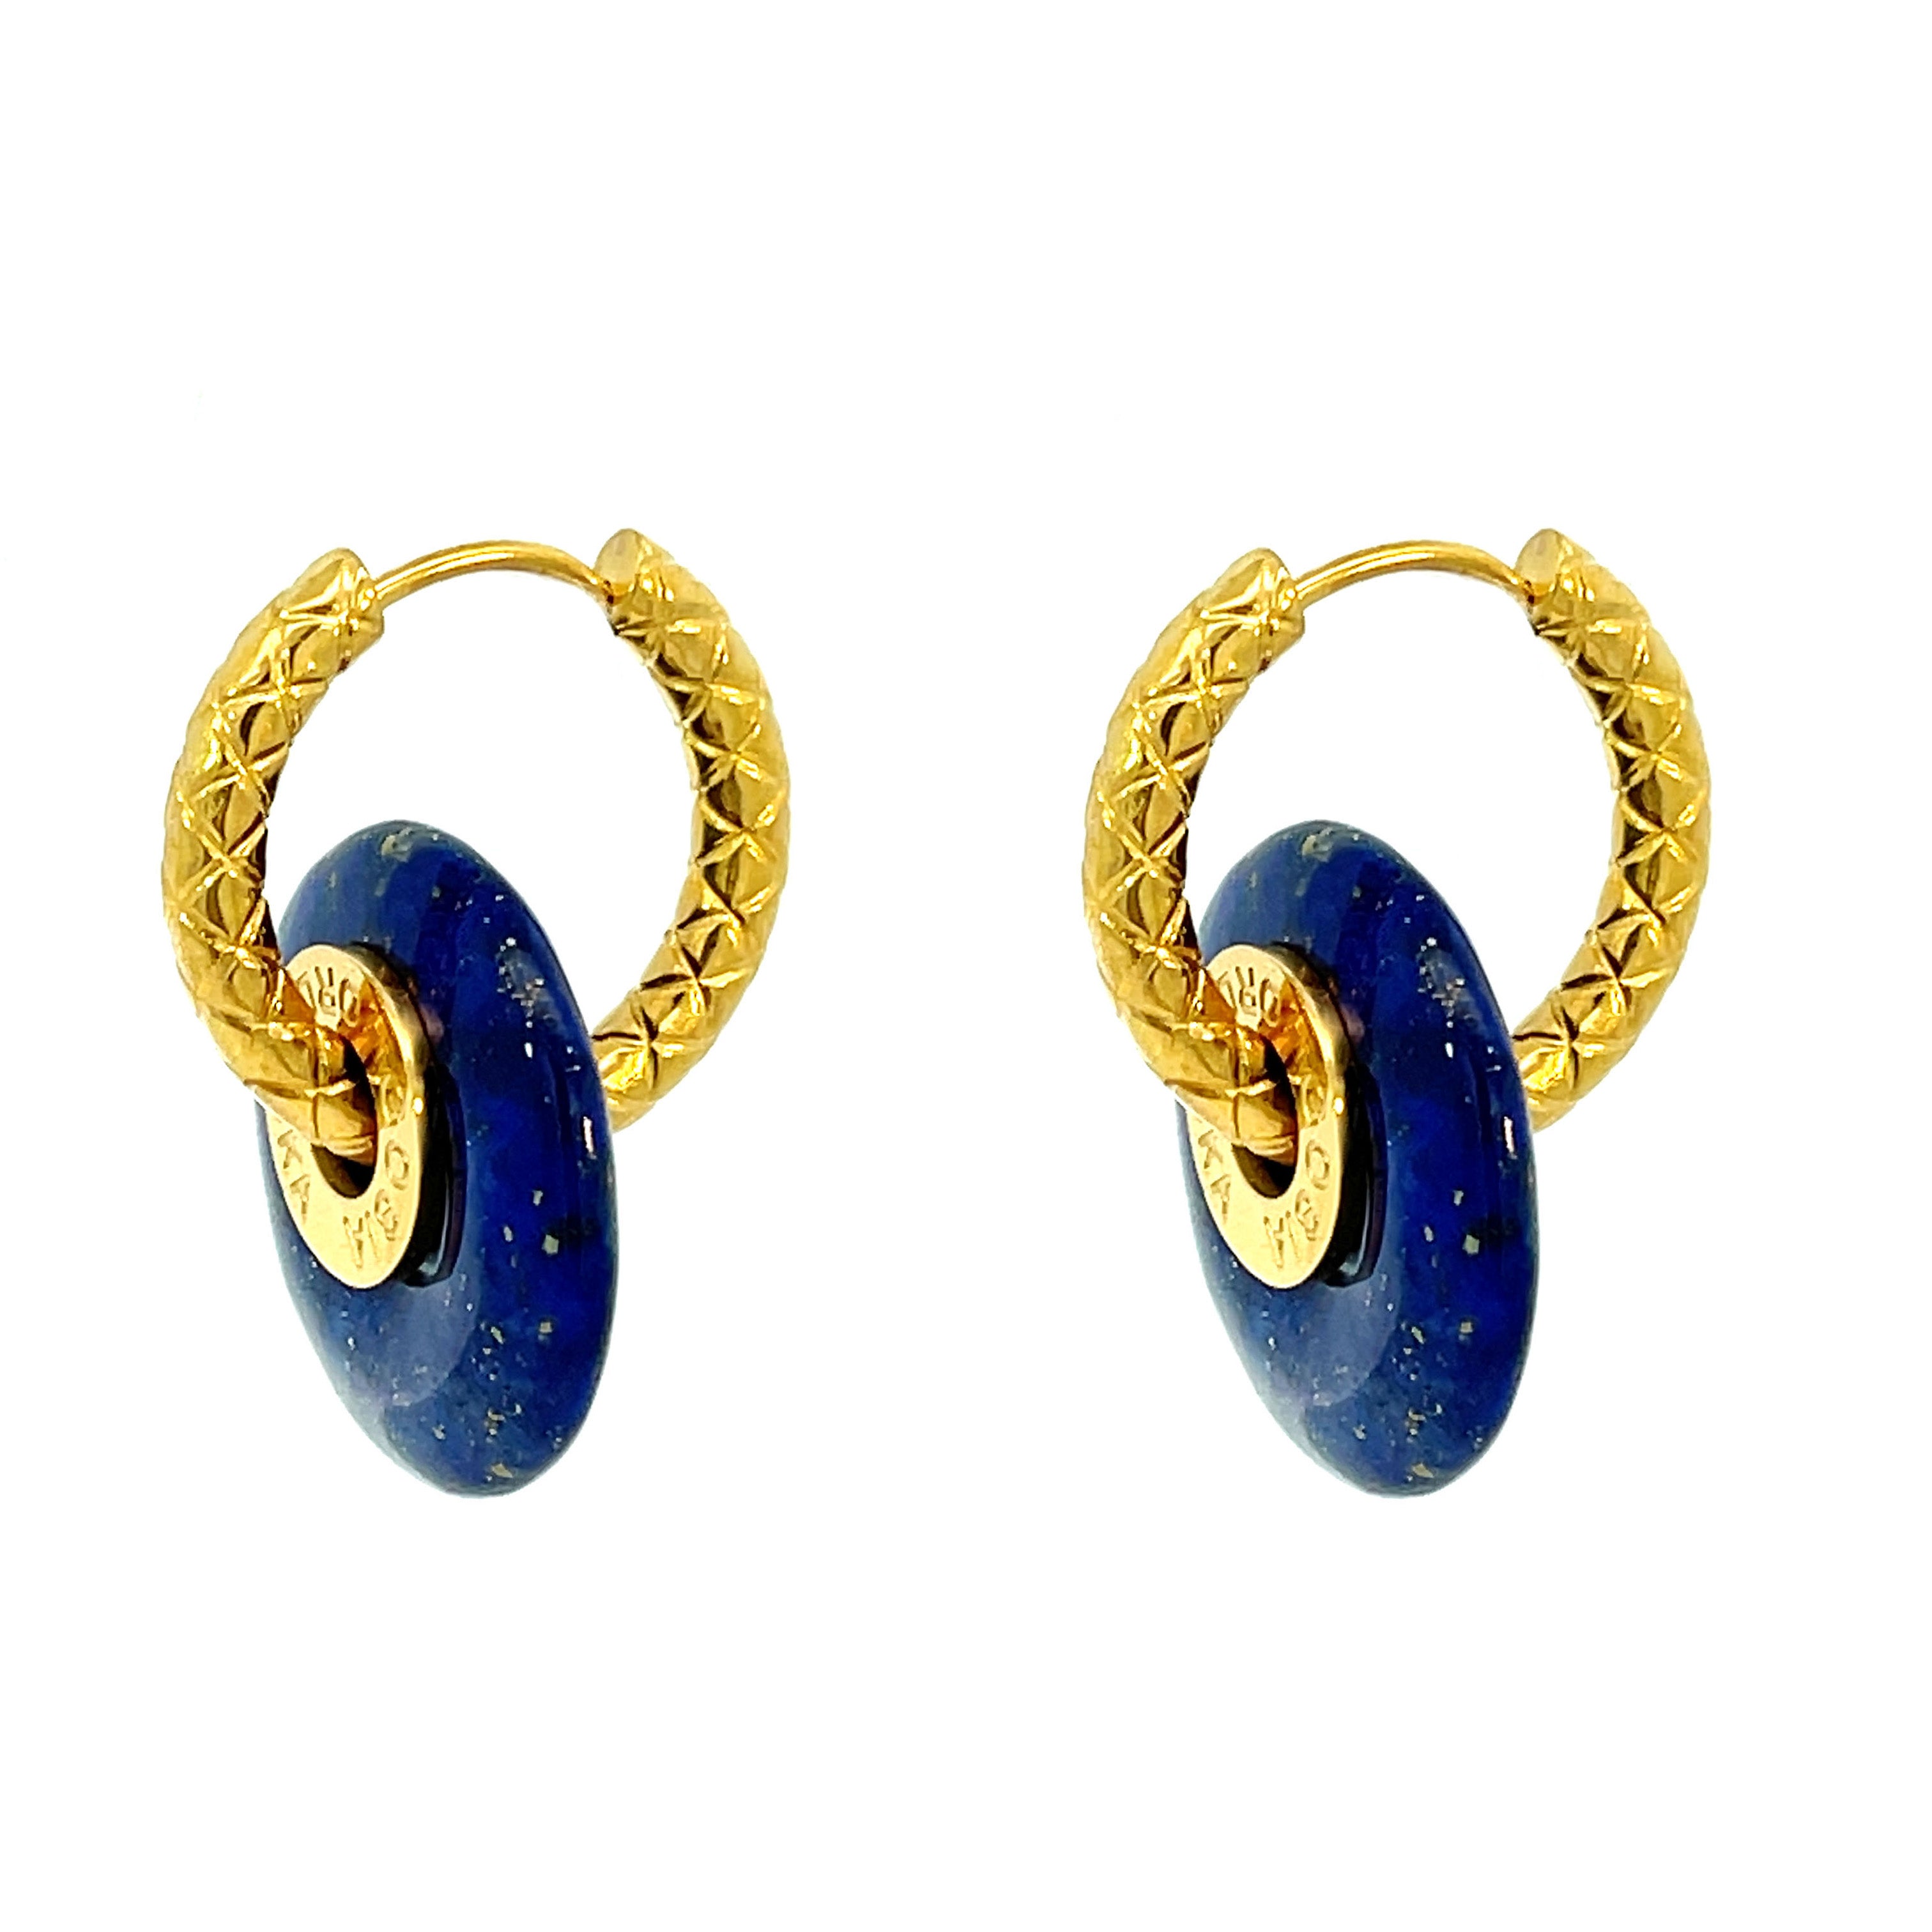 Discover Unique Single Stone Earrings by Gosia Orlowska